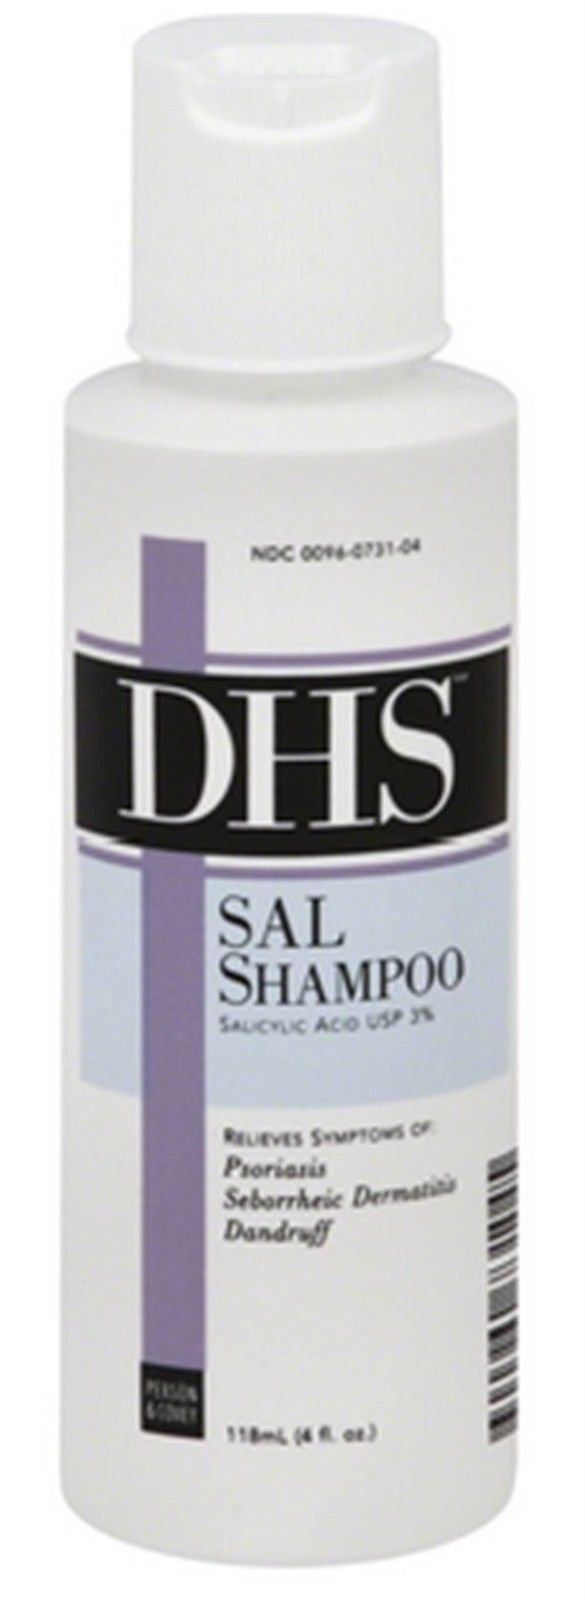 DHS Sal Shampoo 4 Oz